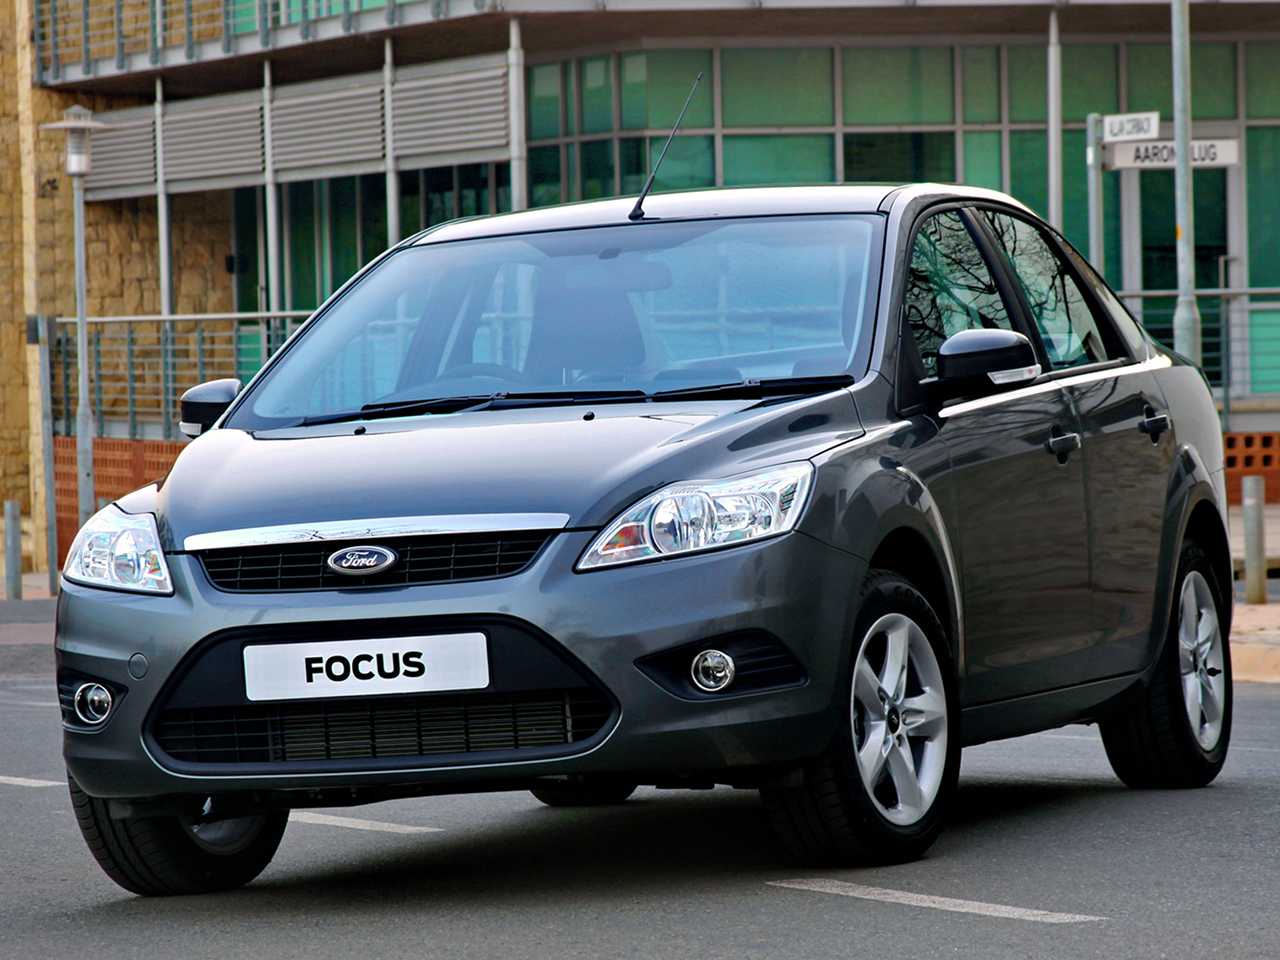 Куплю форд 2010г. Ford Focus 2010. Форд фокус 2010 седан. Форд фокус 2 2010. Ford Focus 2 2010 седан.